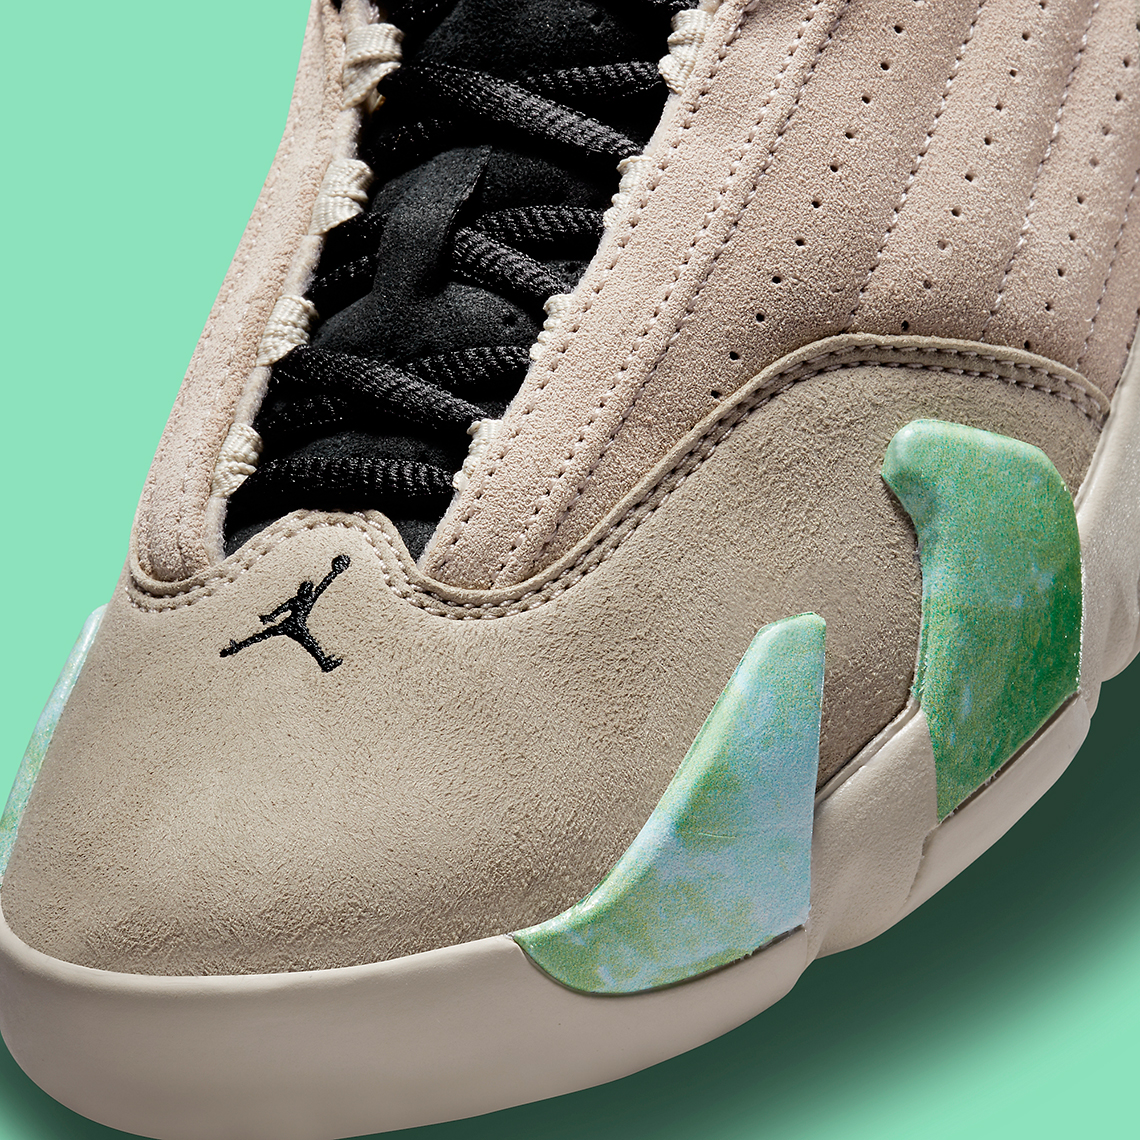 Air Jordan 13 Flint Shirts OMG Sneakers Low Aleali May Dj1034 200 Release Date 3